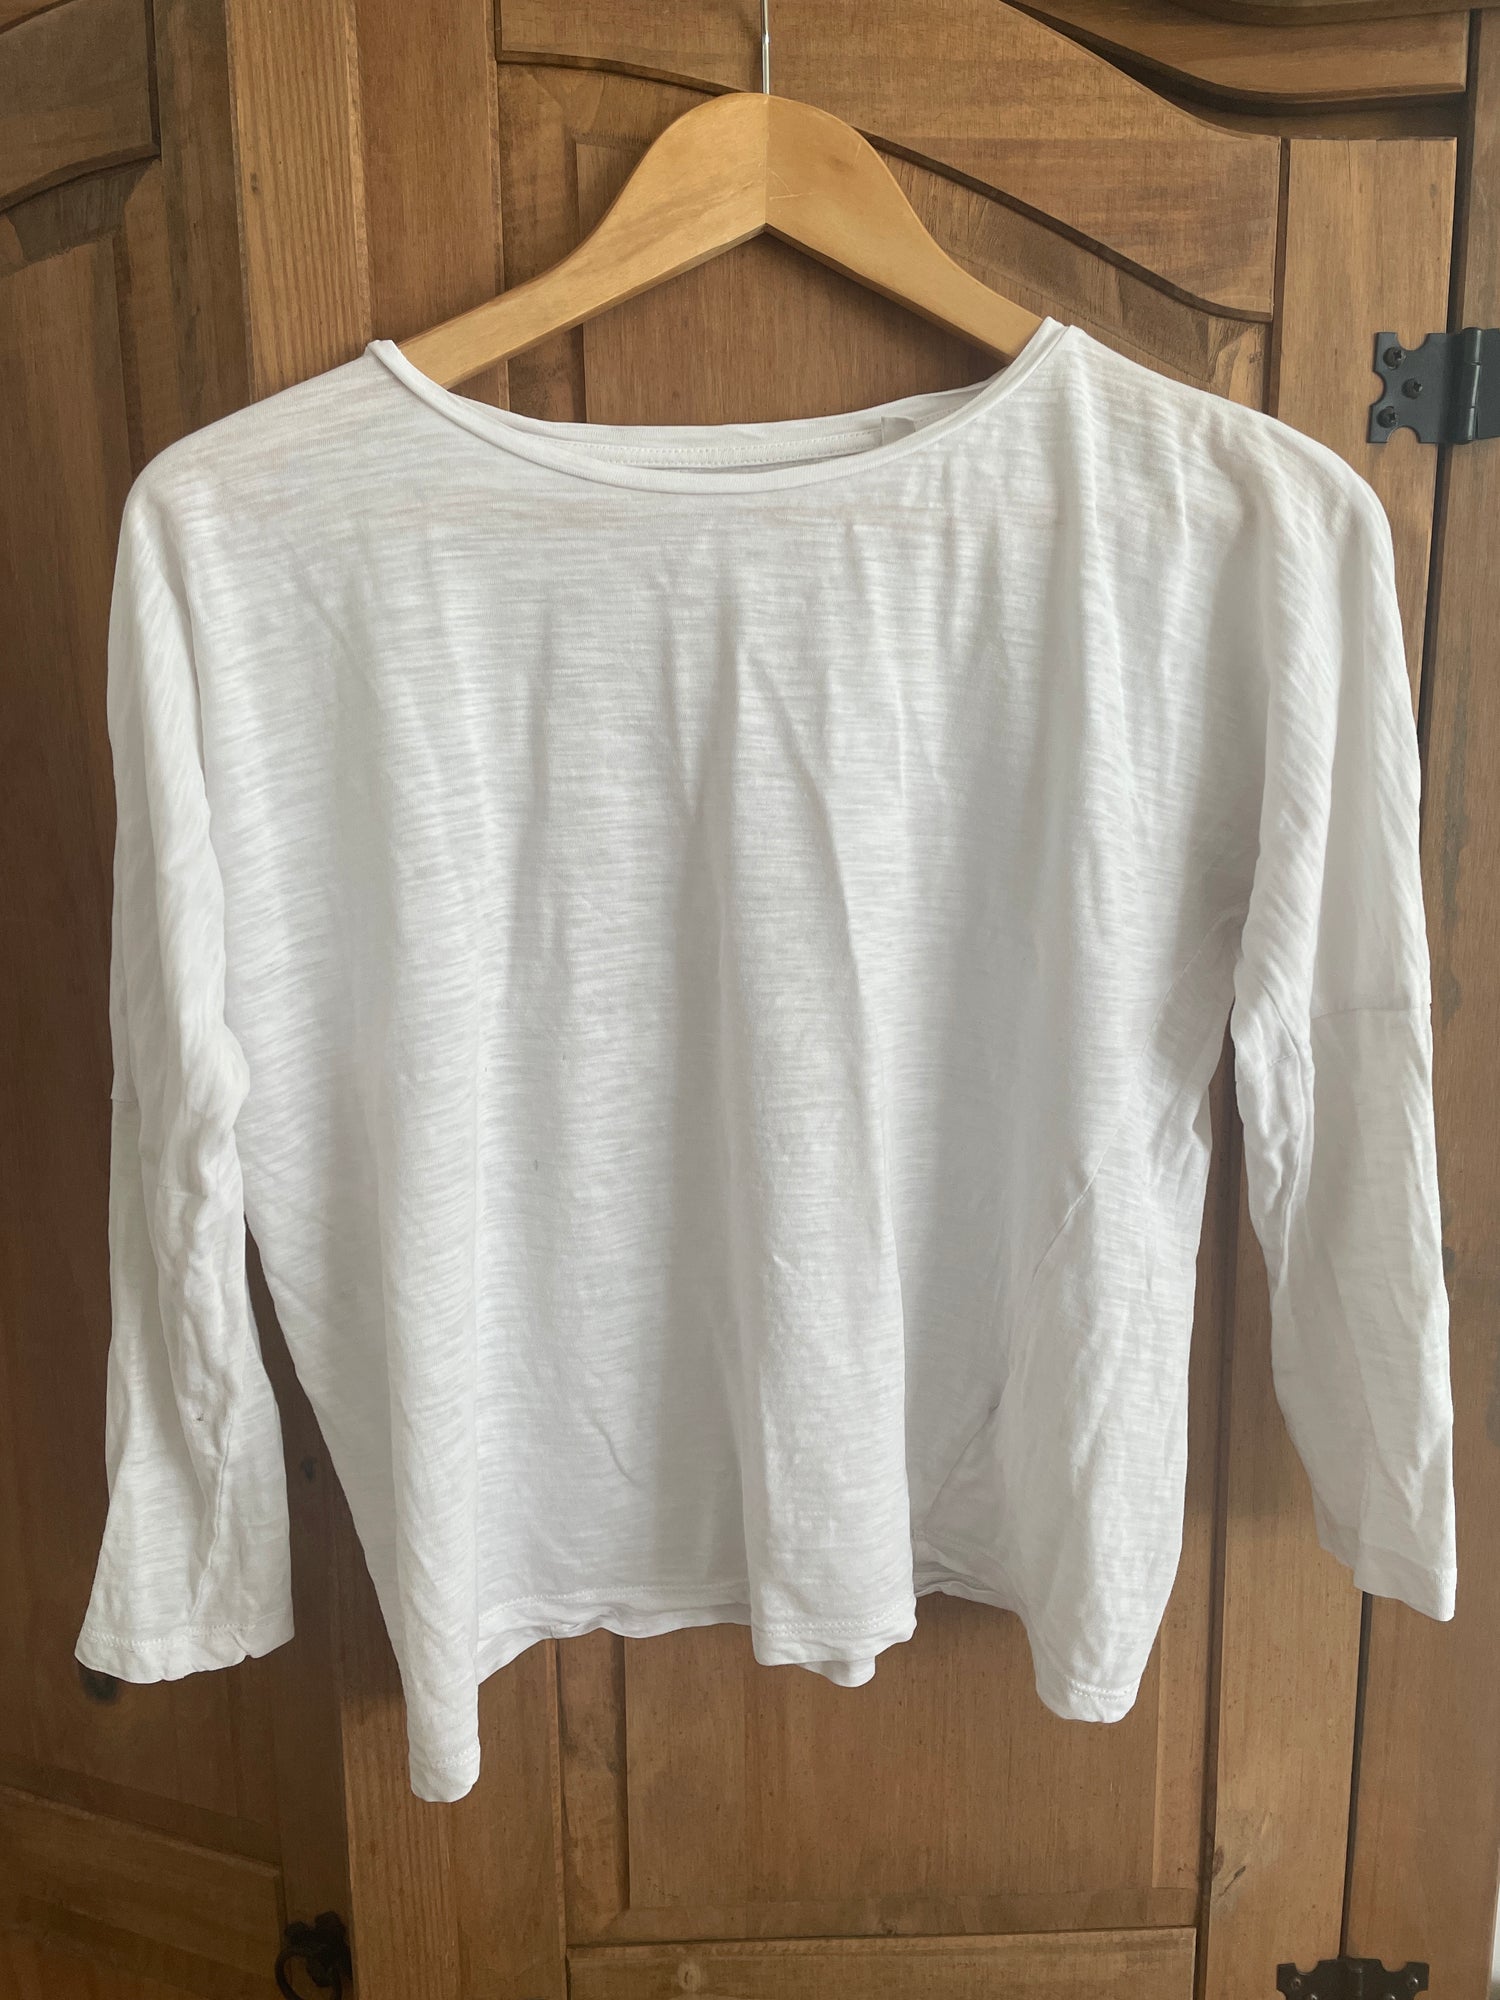 Preloved White T-shirt size 8